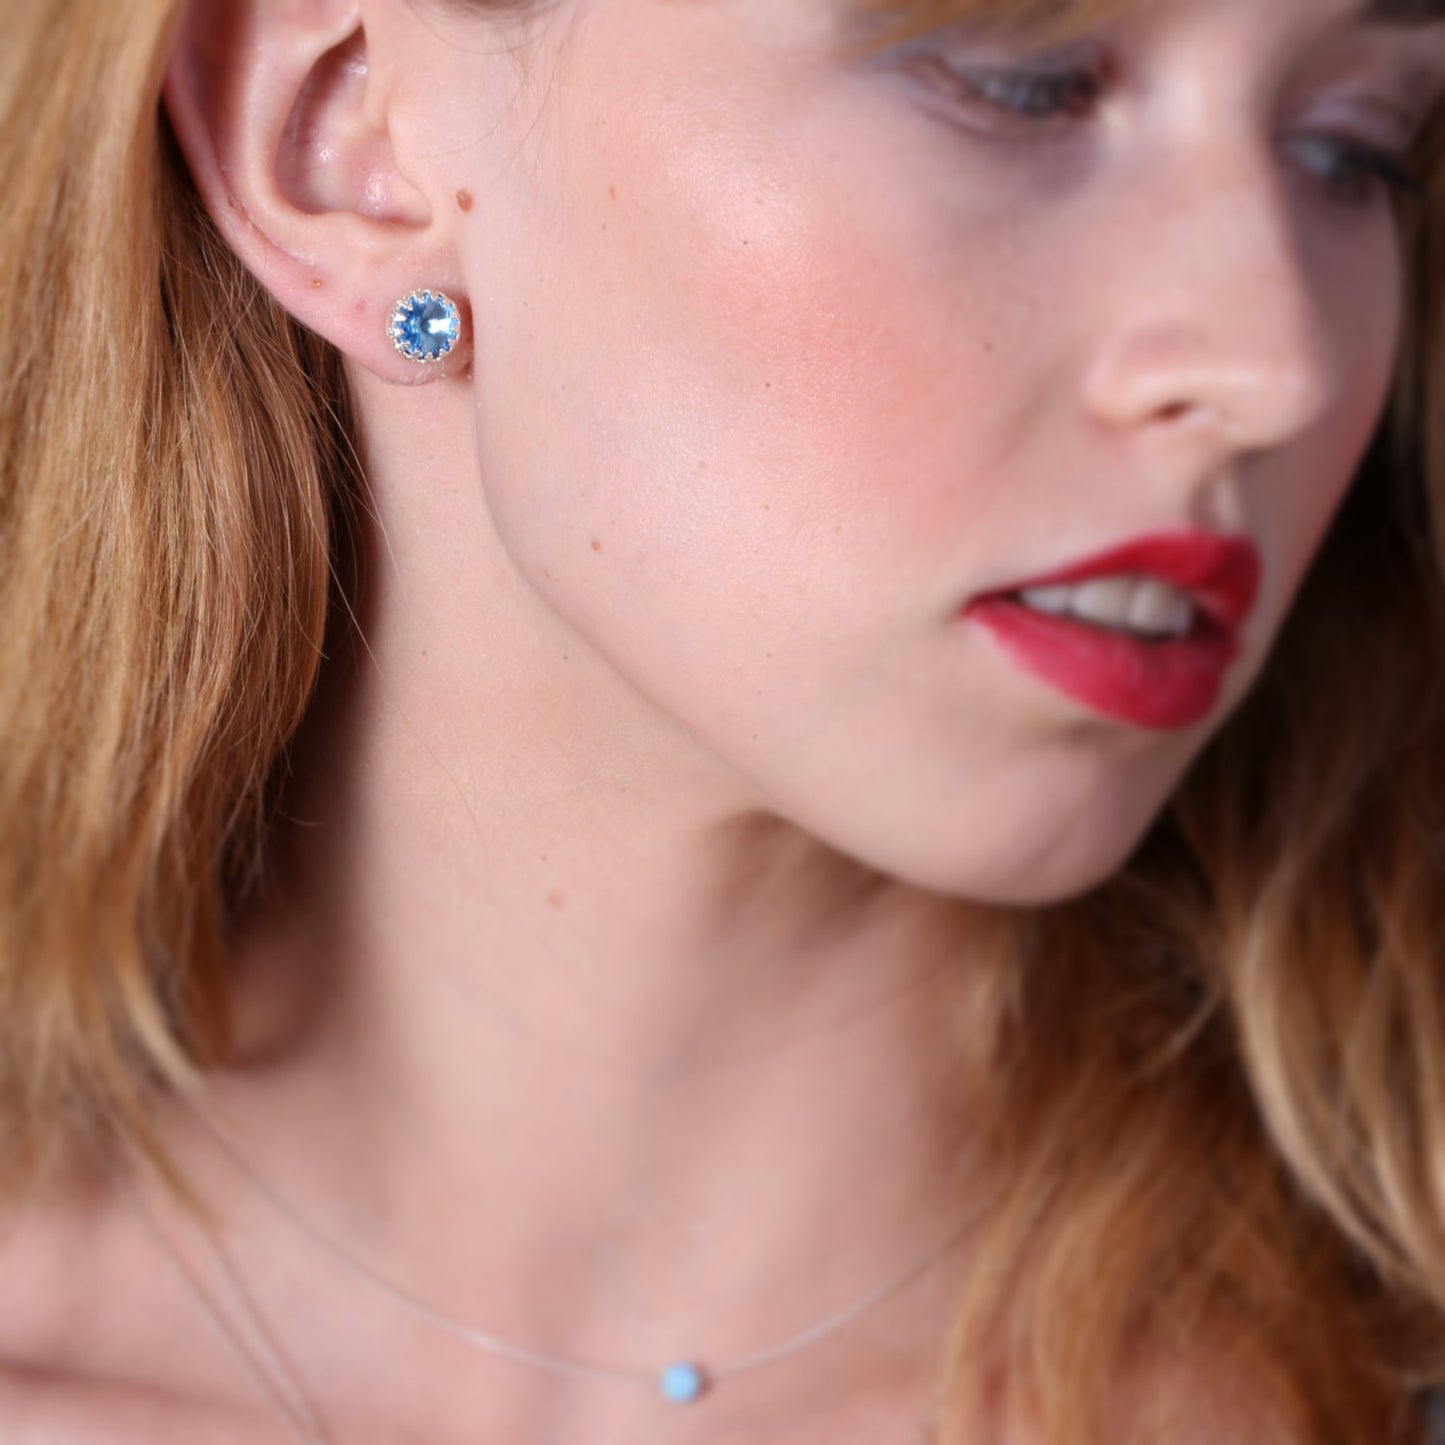 Silver Aquamarine Stud Earrings